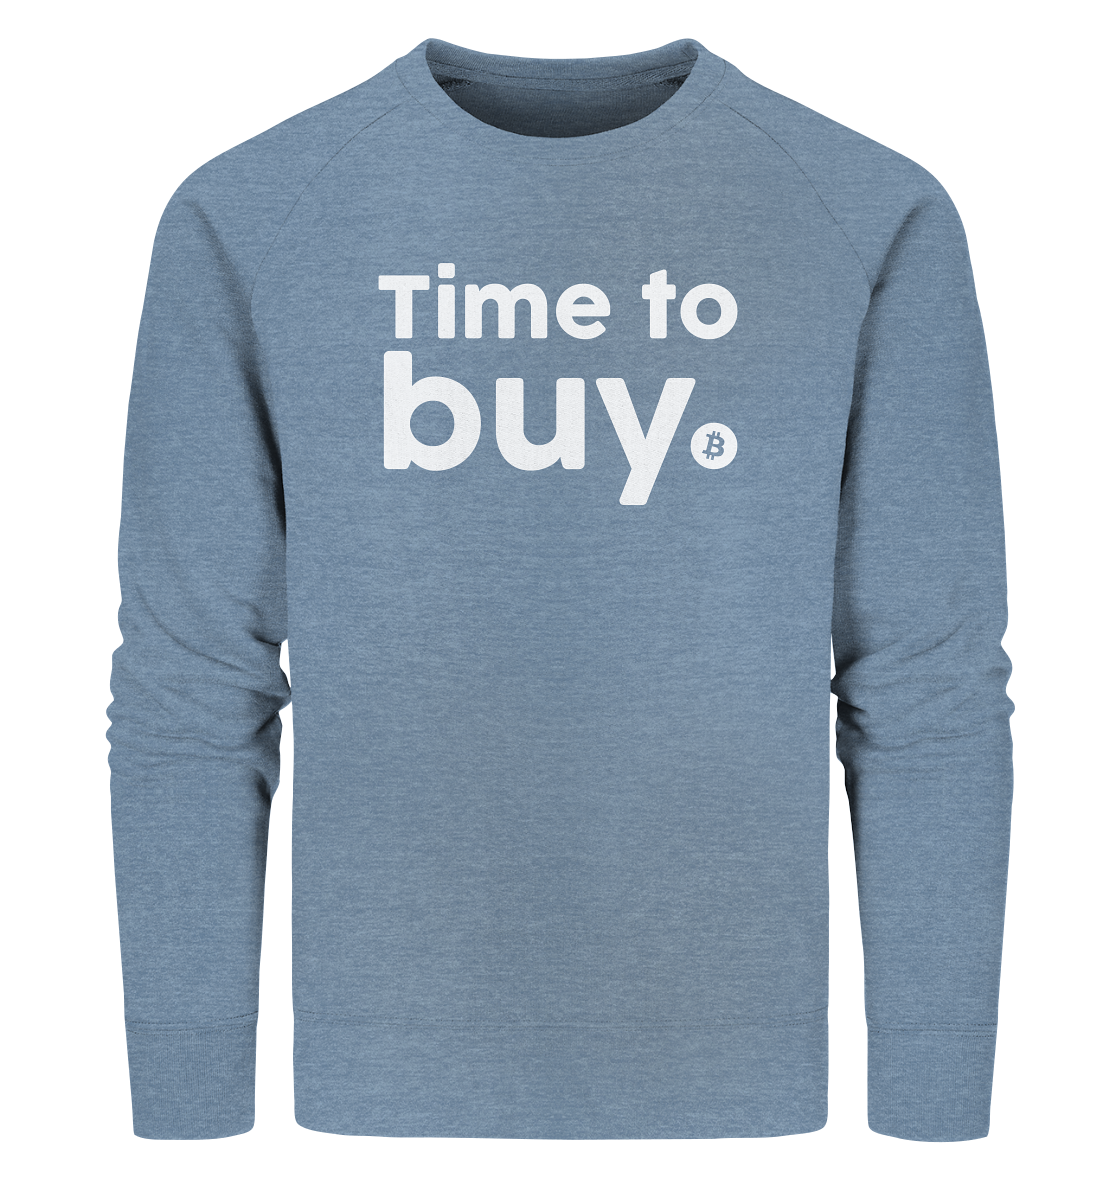 Bitcoin - Time to buy - Organic Sweatshirt